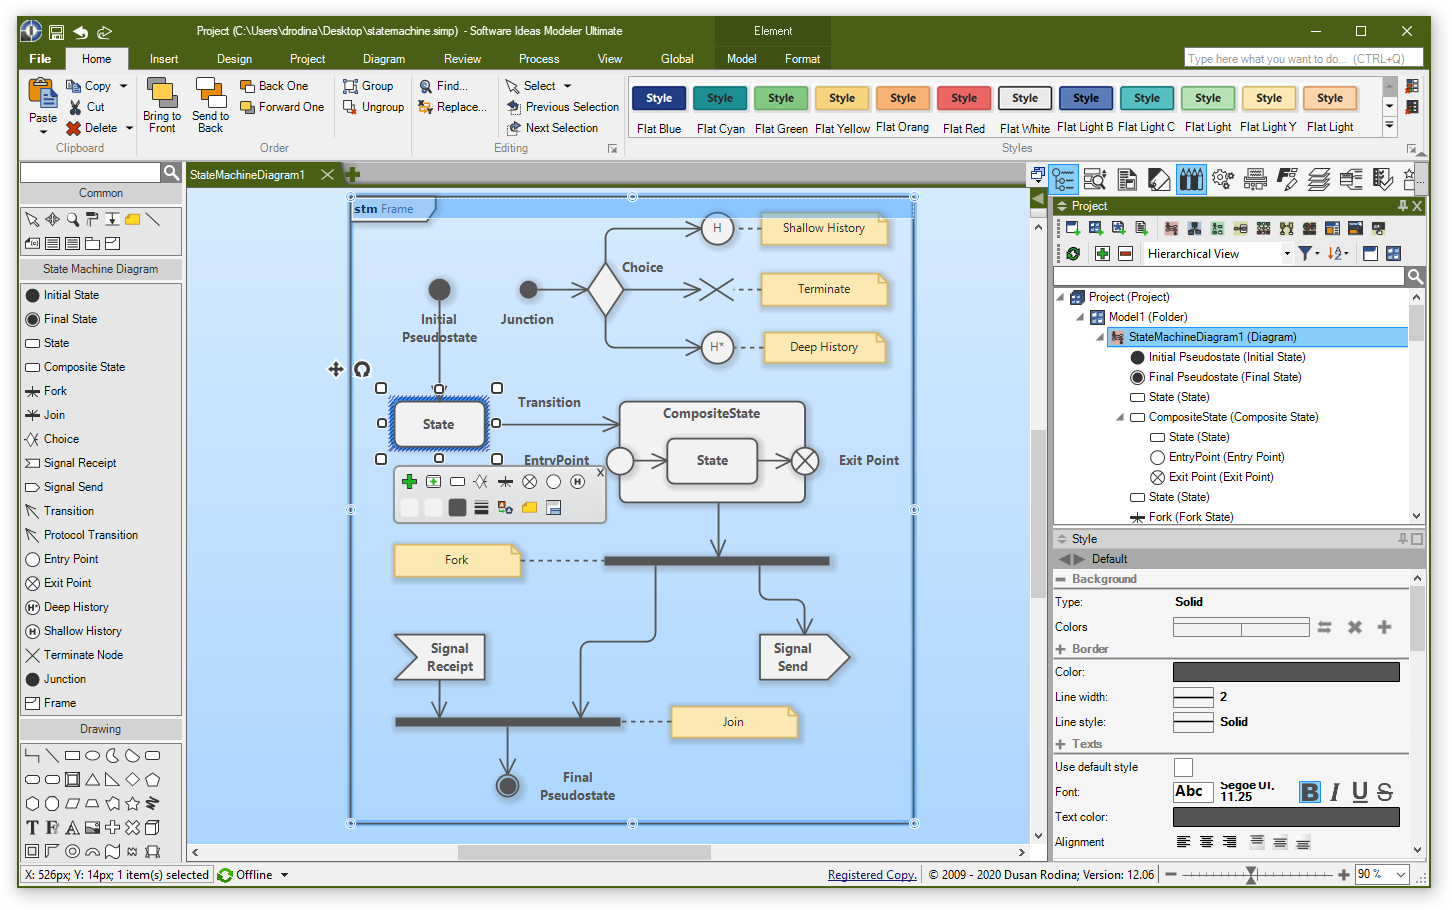 Software Ideas Modeler - Diagramming Software